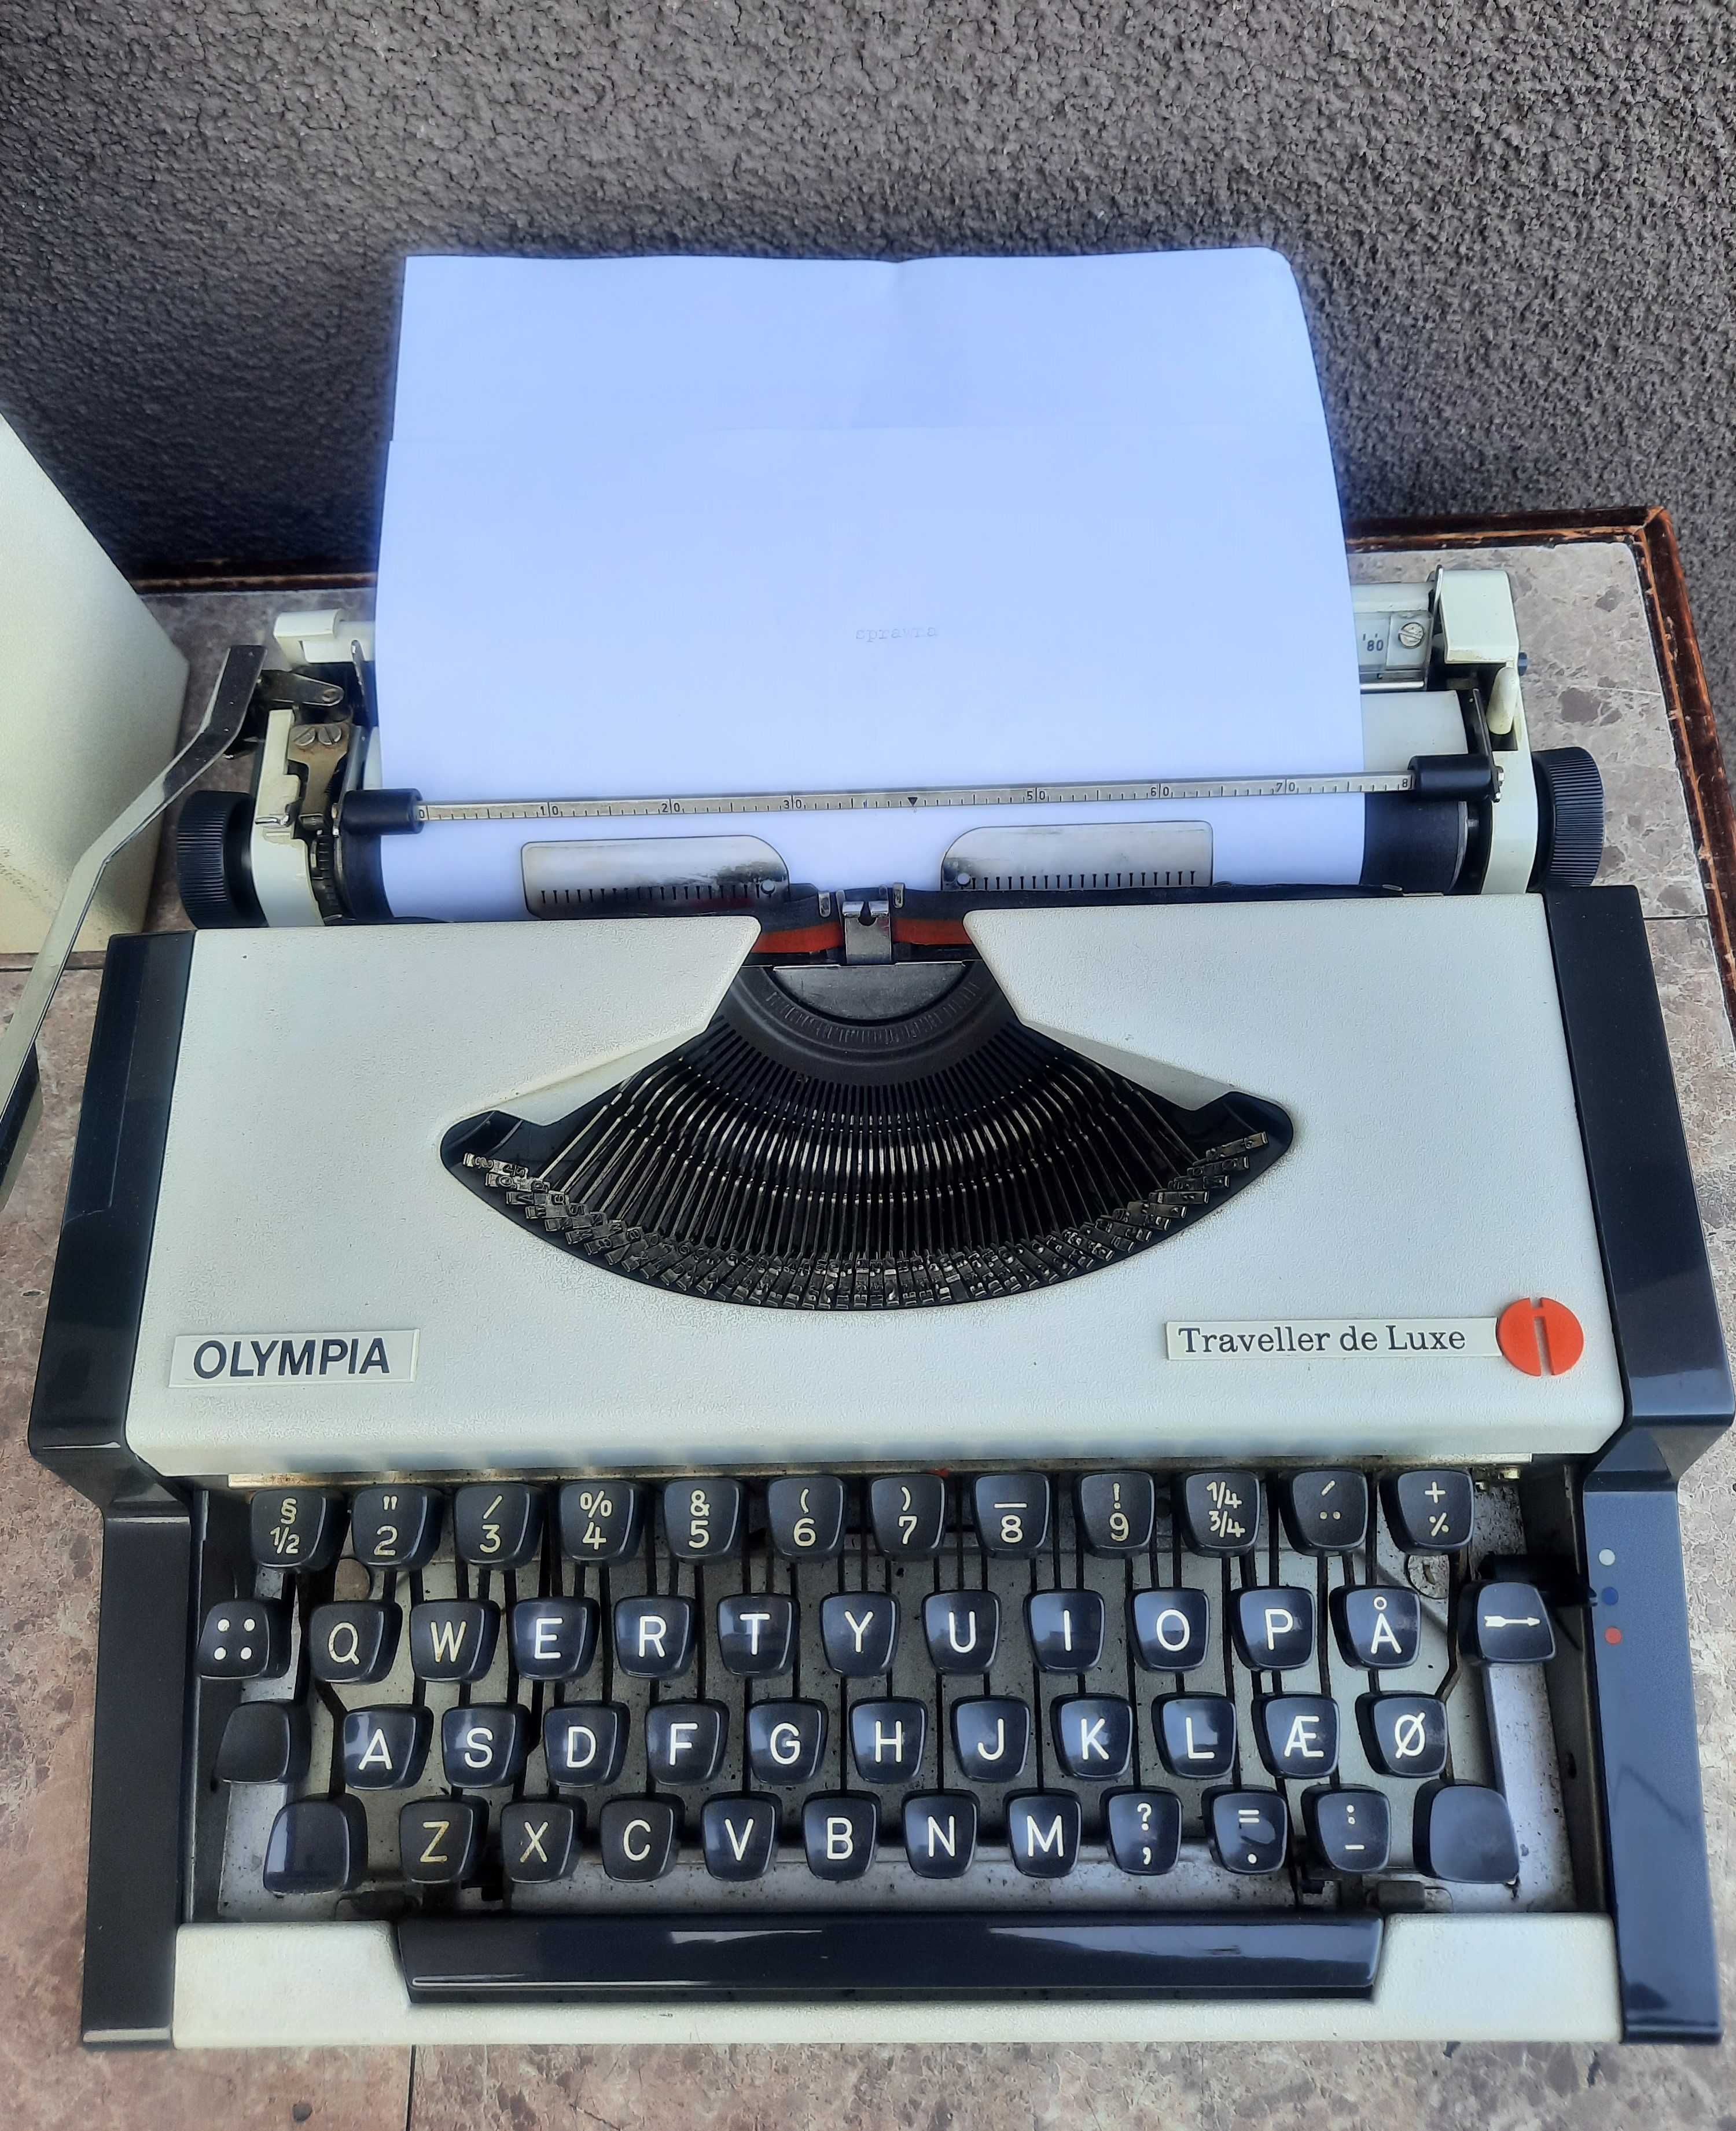 Stara maszyna do pisania Olympia Traveller de Luxe